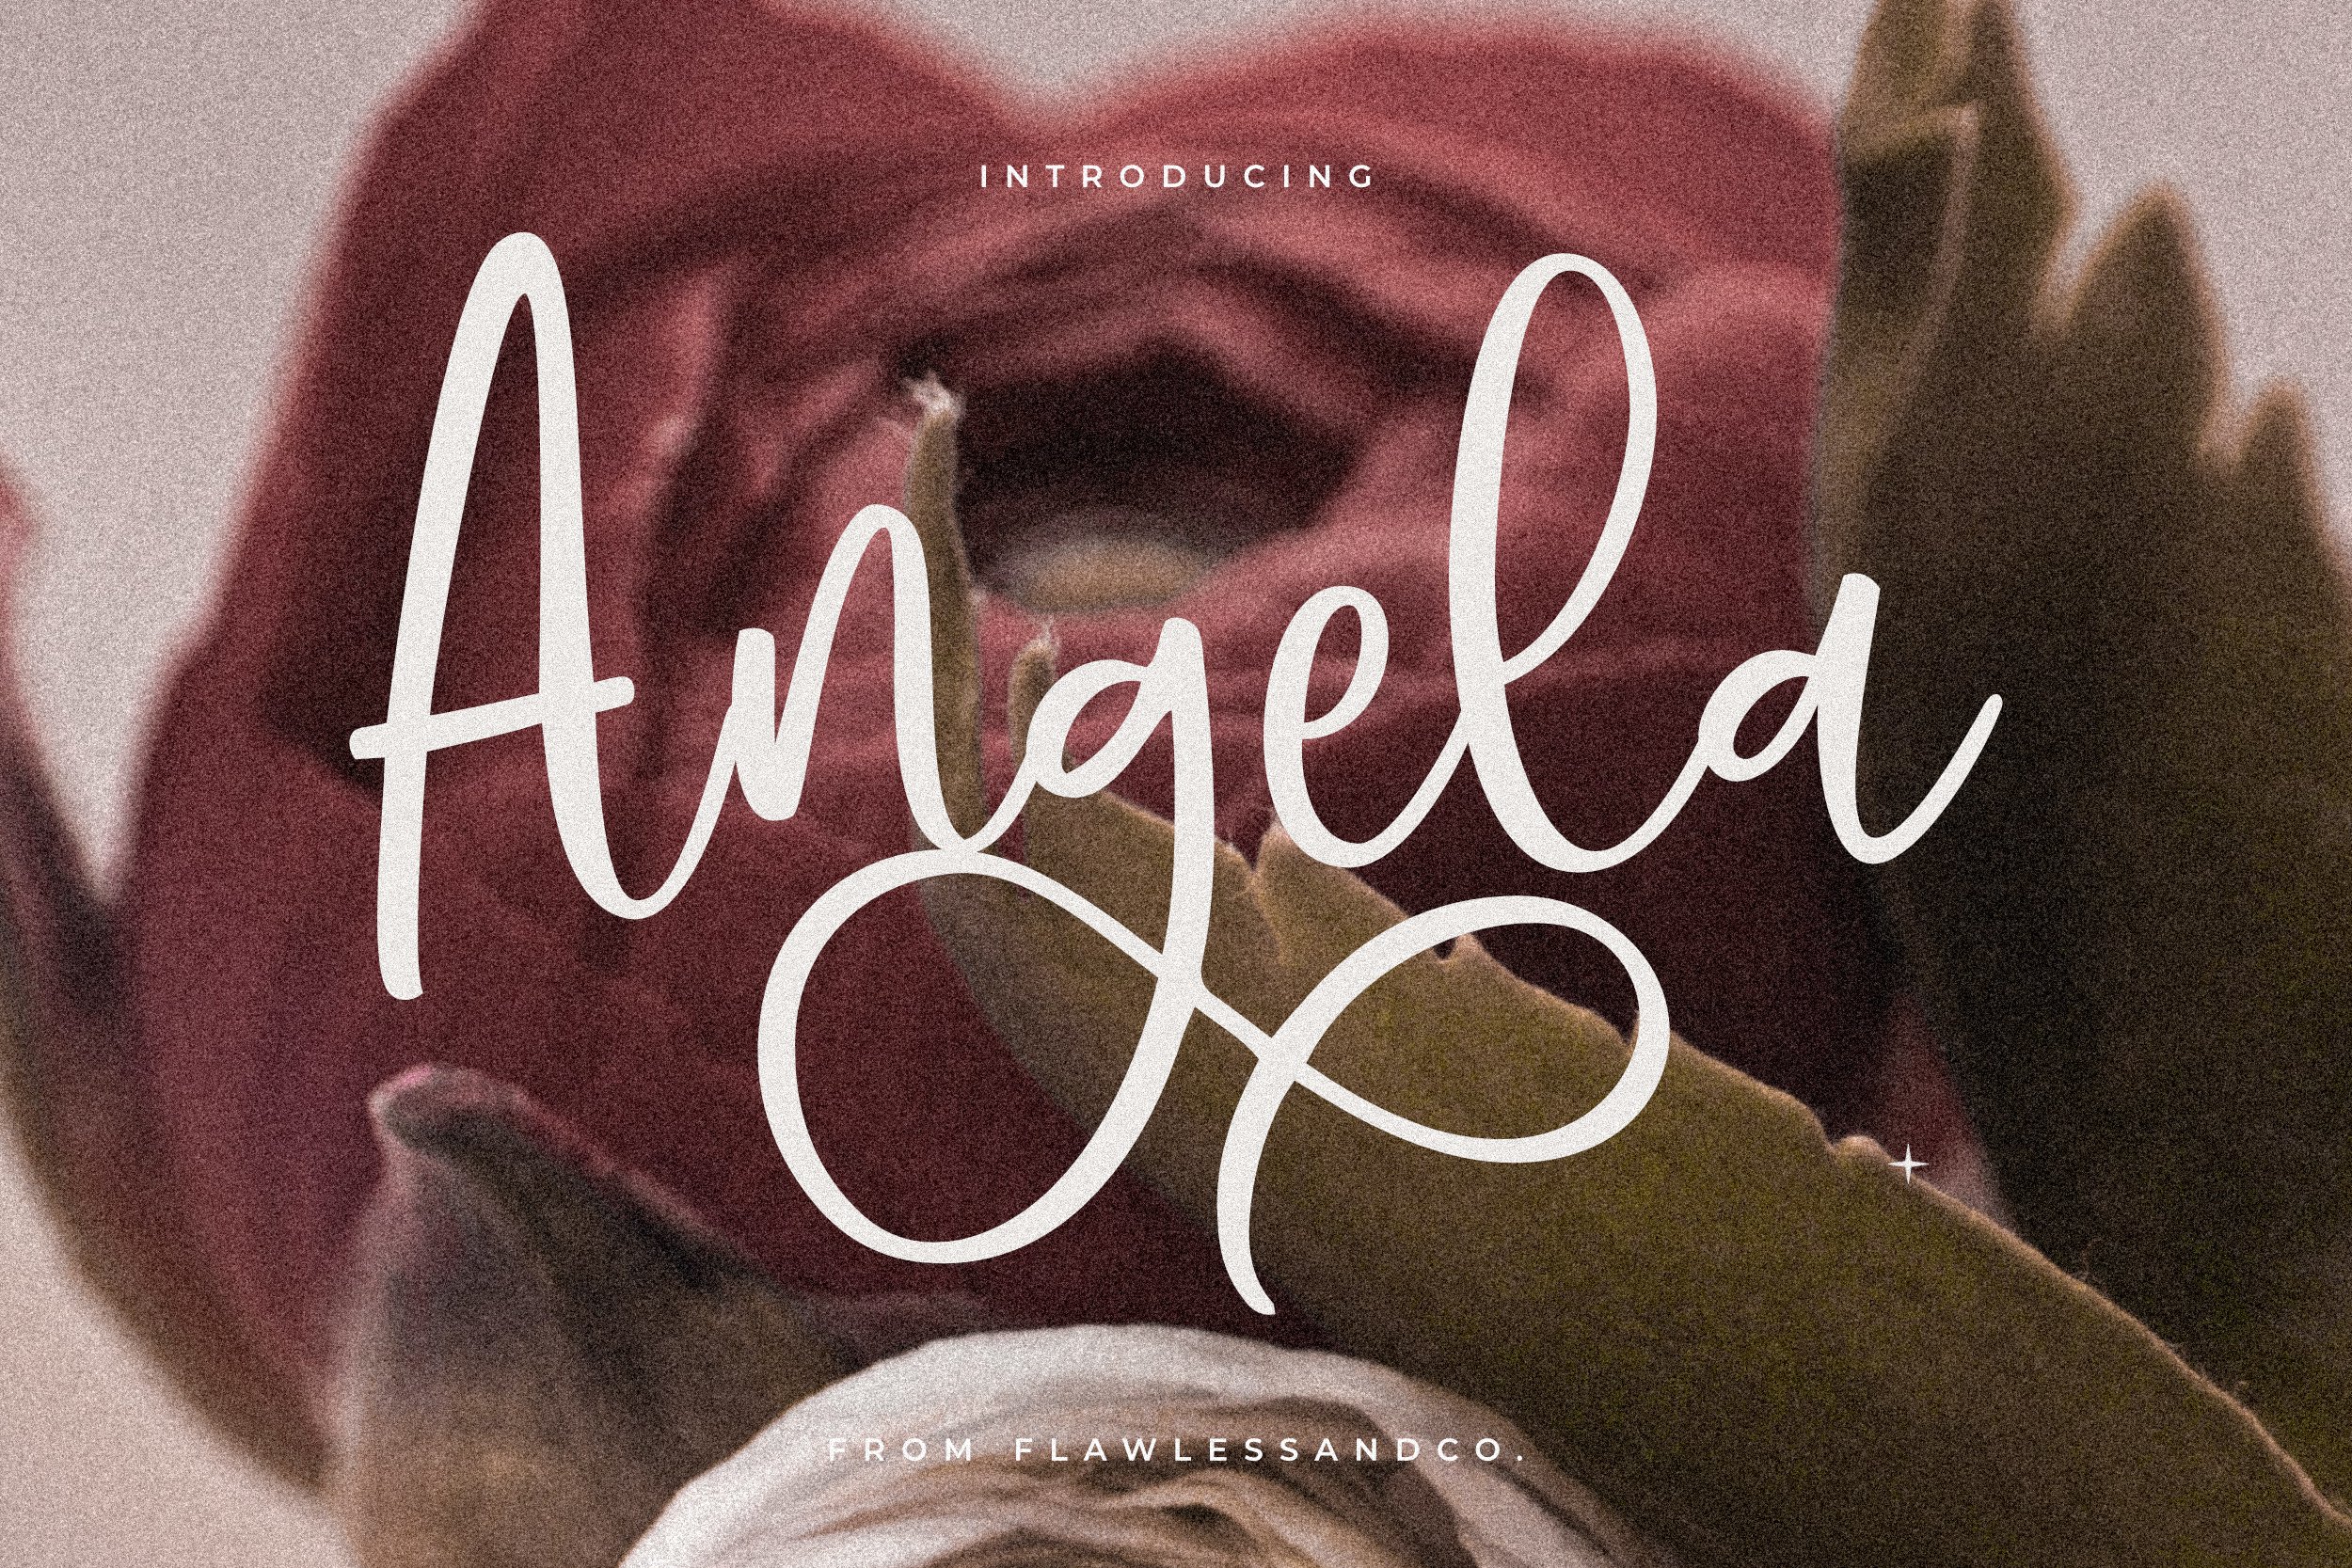 Angela - Script Wedding Font cover image.